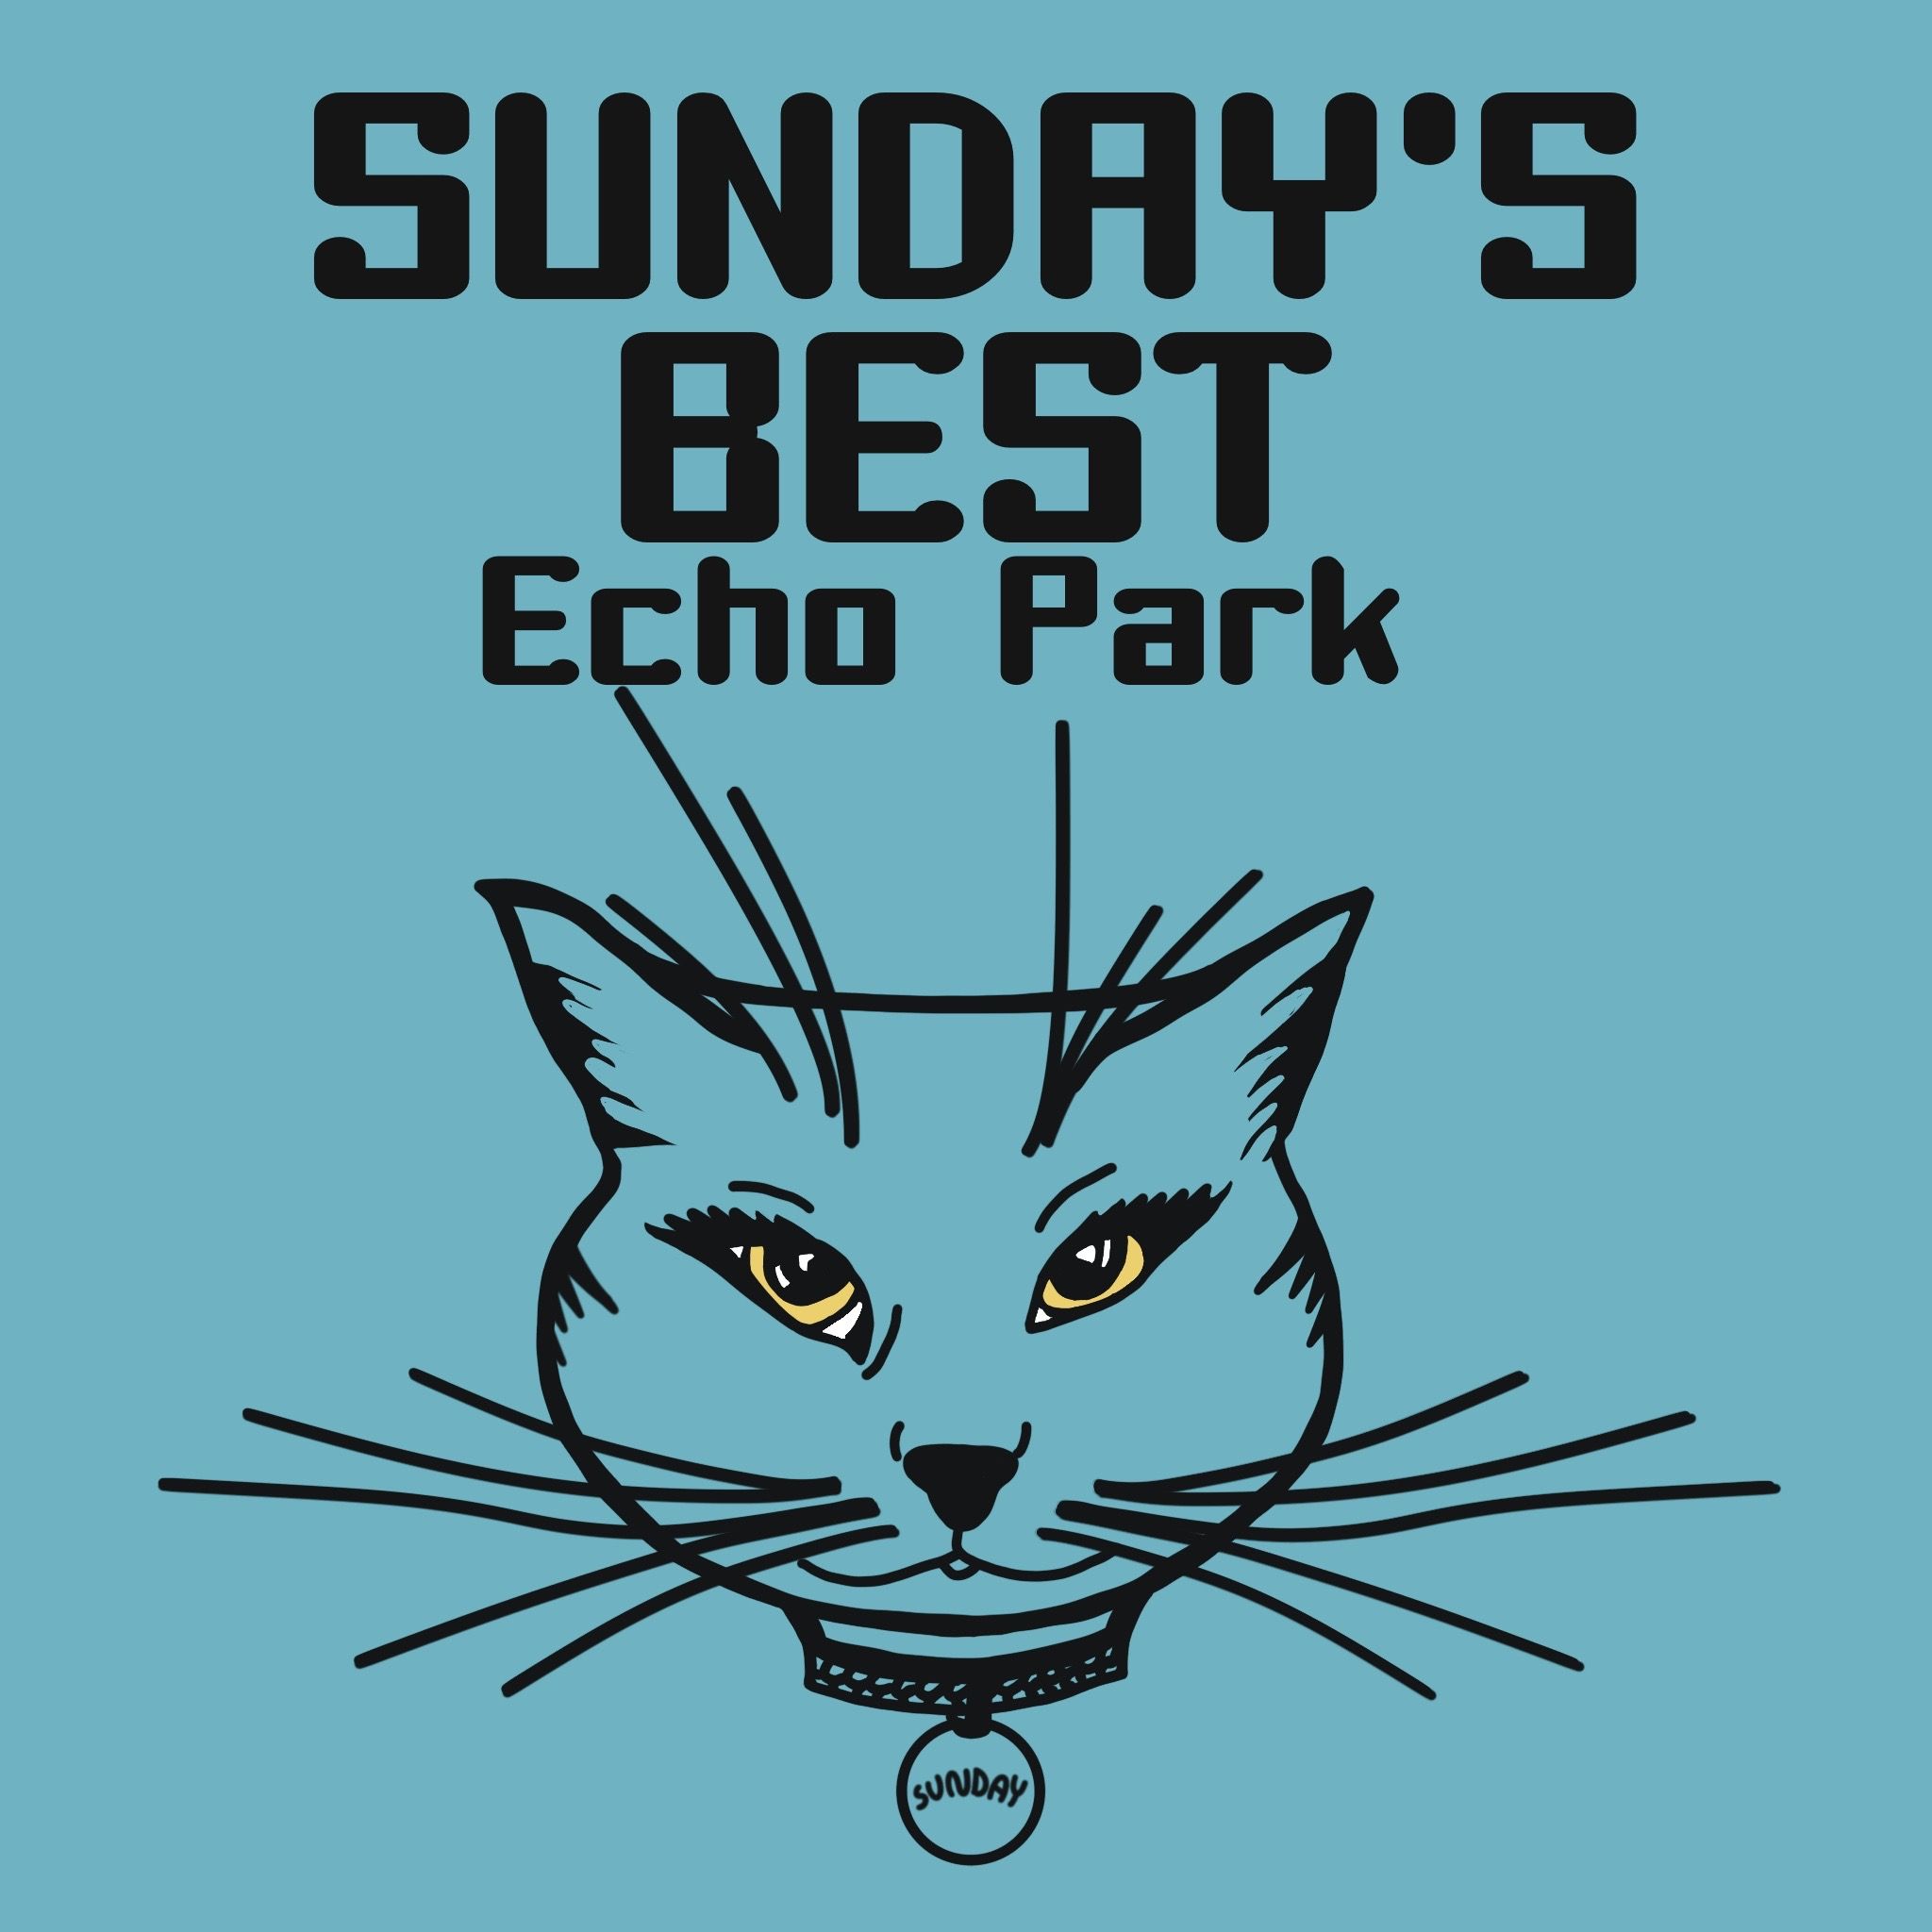 Sunday's Best Echo Park